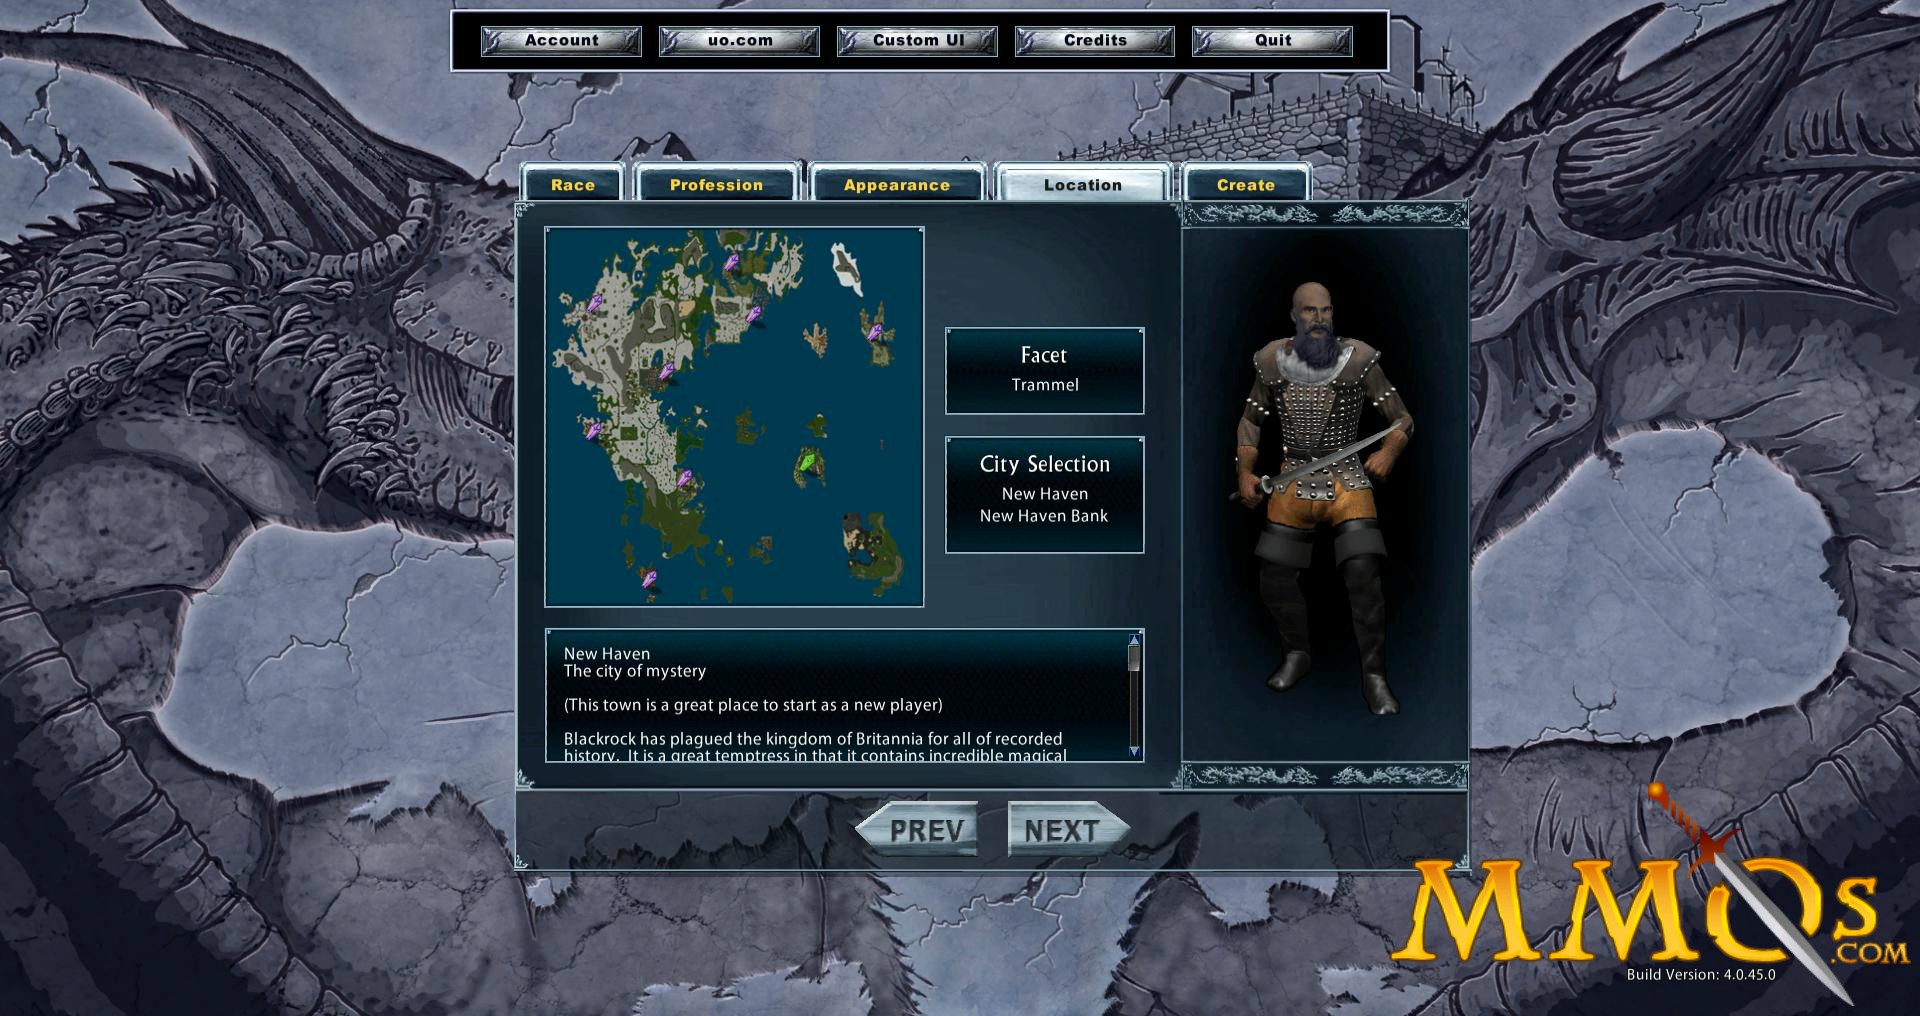 Ultima Online designer Raph Koster working on new sandbox MMO